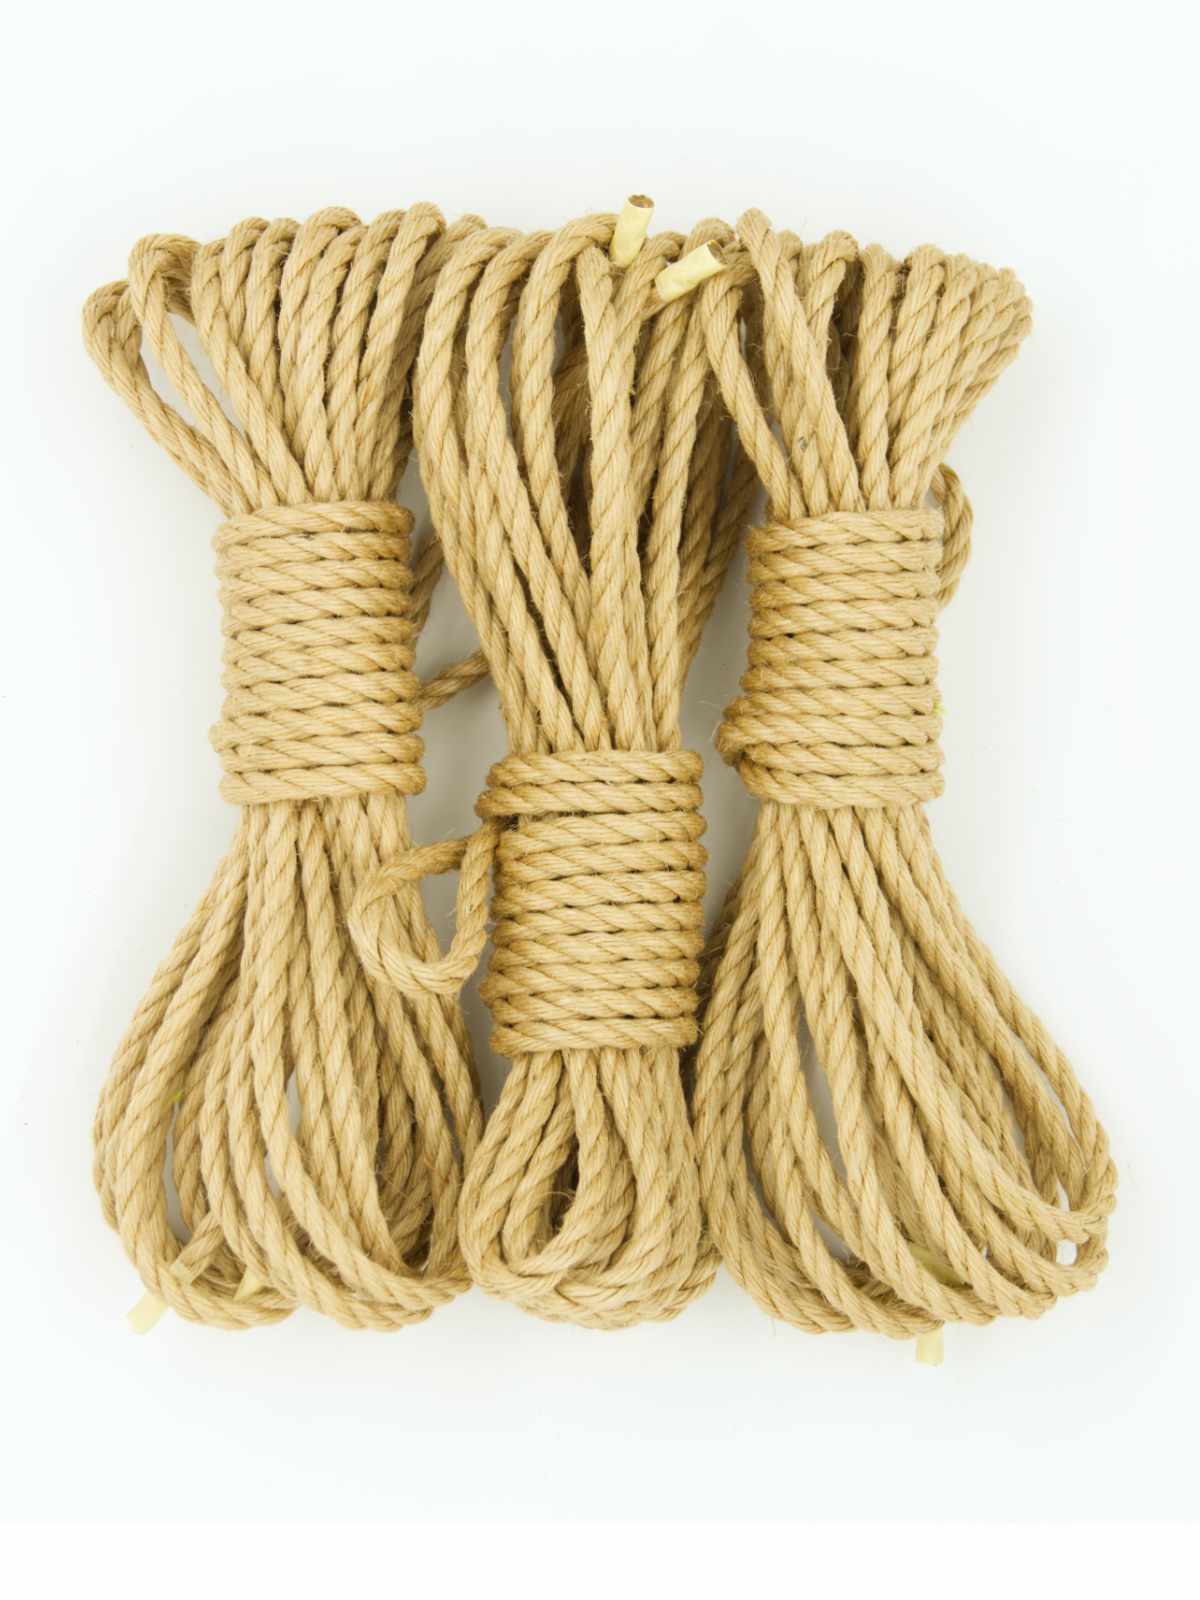 ø 6mm RAW Jouyoku jute rope for Shibari, Kinbaku bondage, various lengths